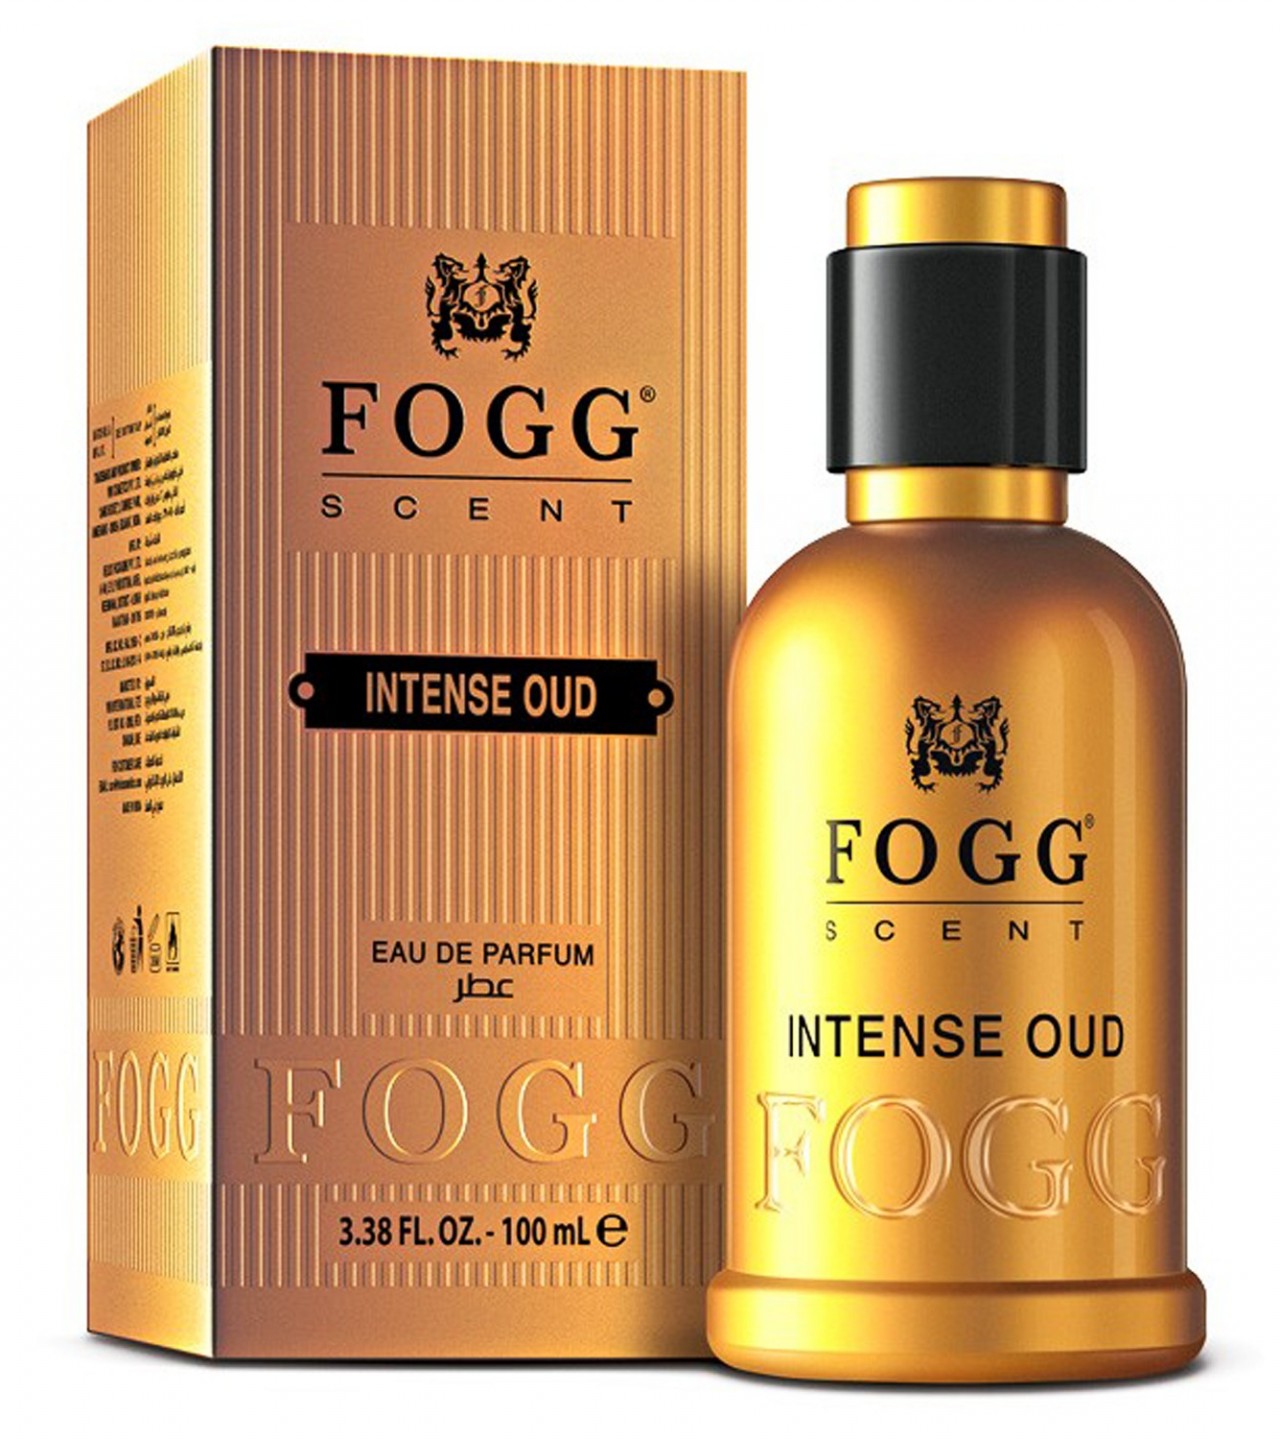 Fogg Scent Intense Oud Attar Perfume For Unisex – 100 ml